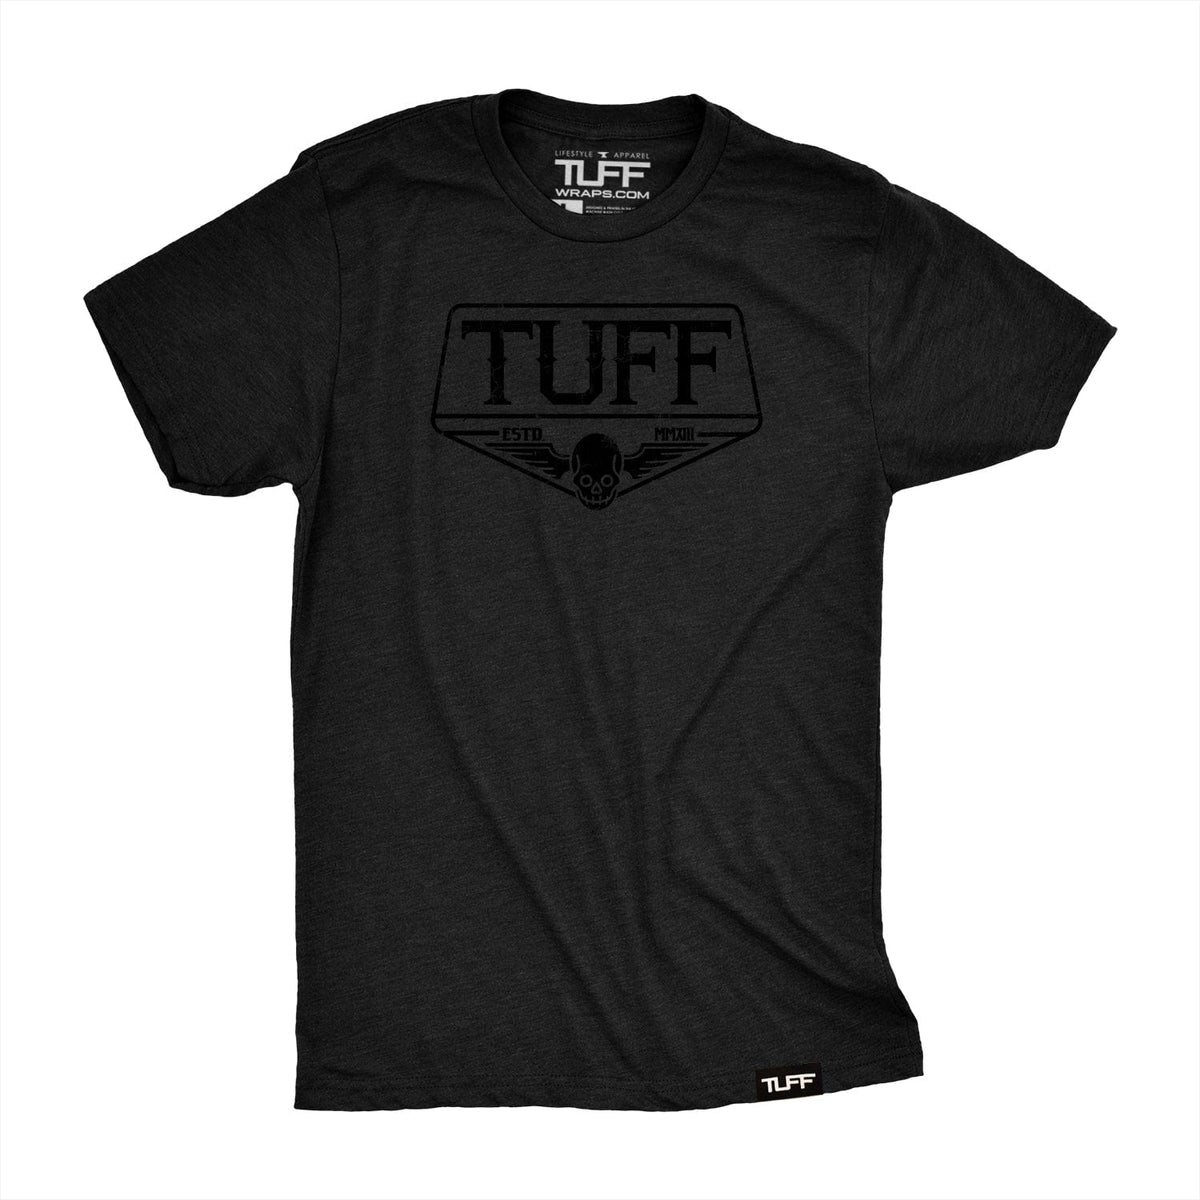 TUFF Blackout Skull Wings Tee T-shirt